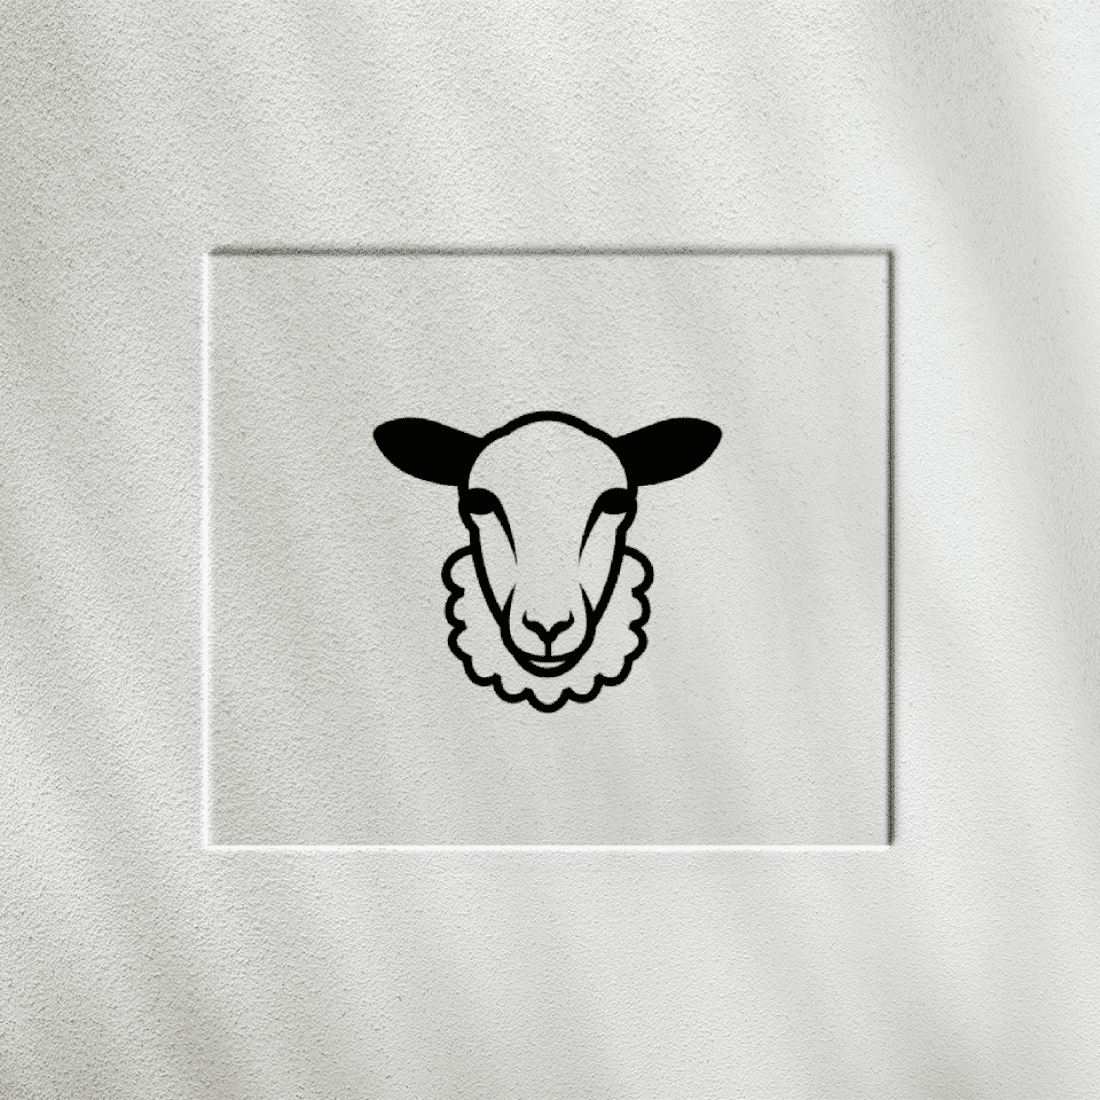 Sheep Logo cover image.